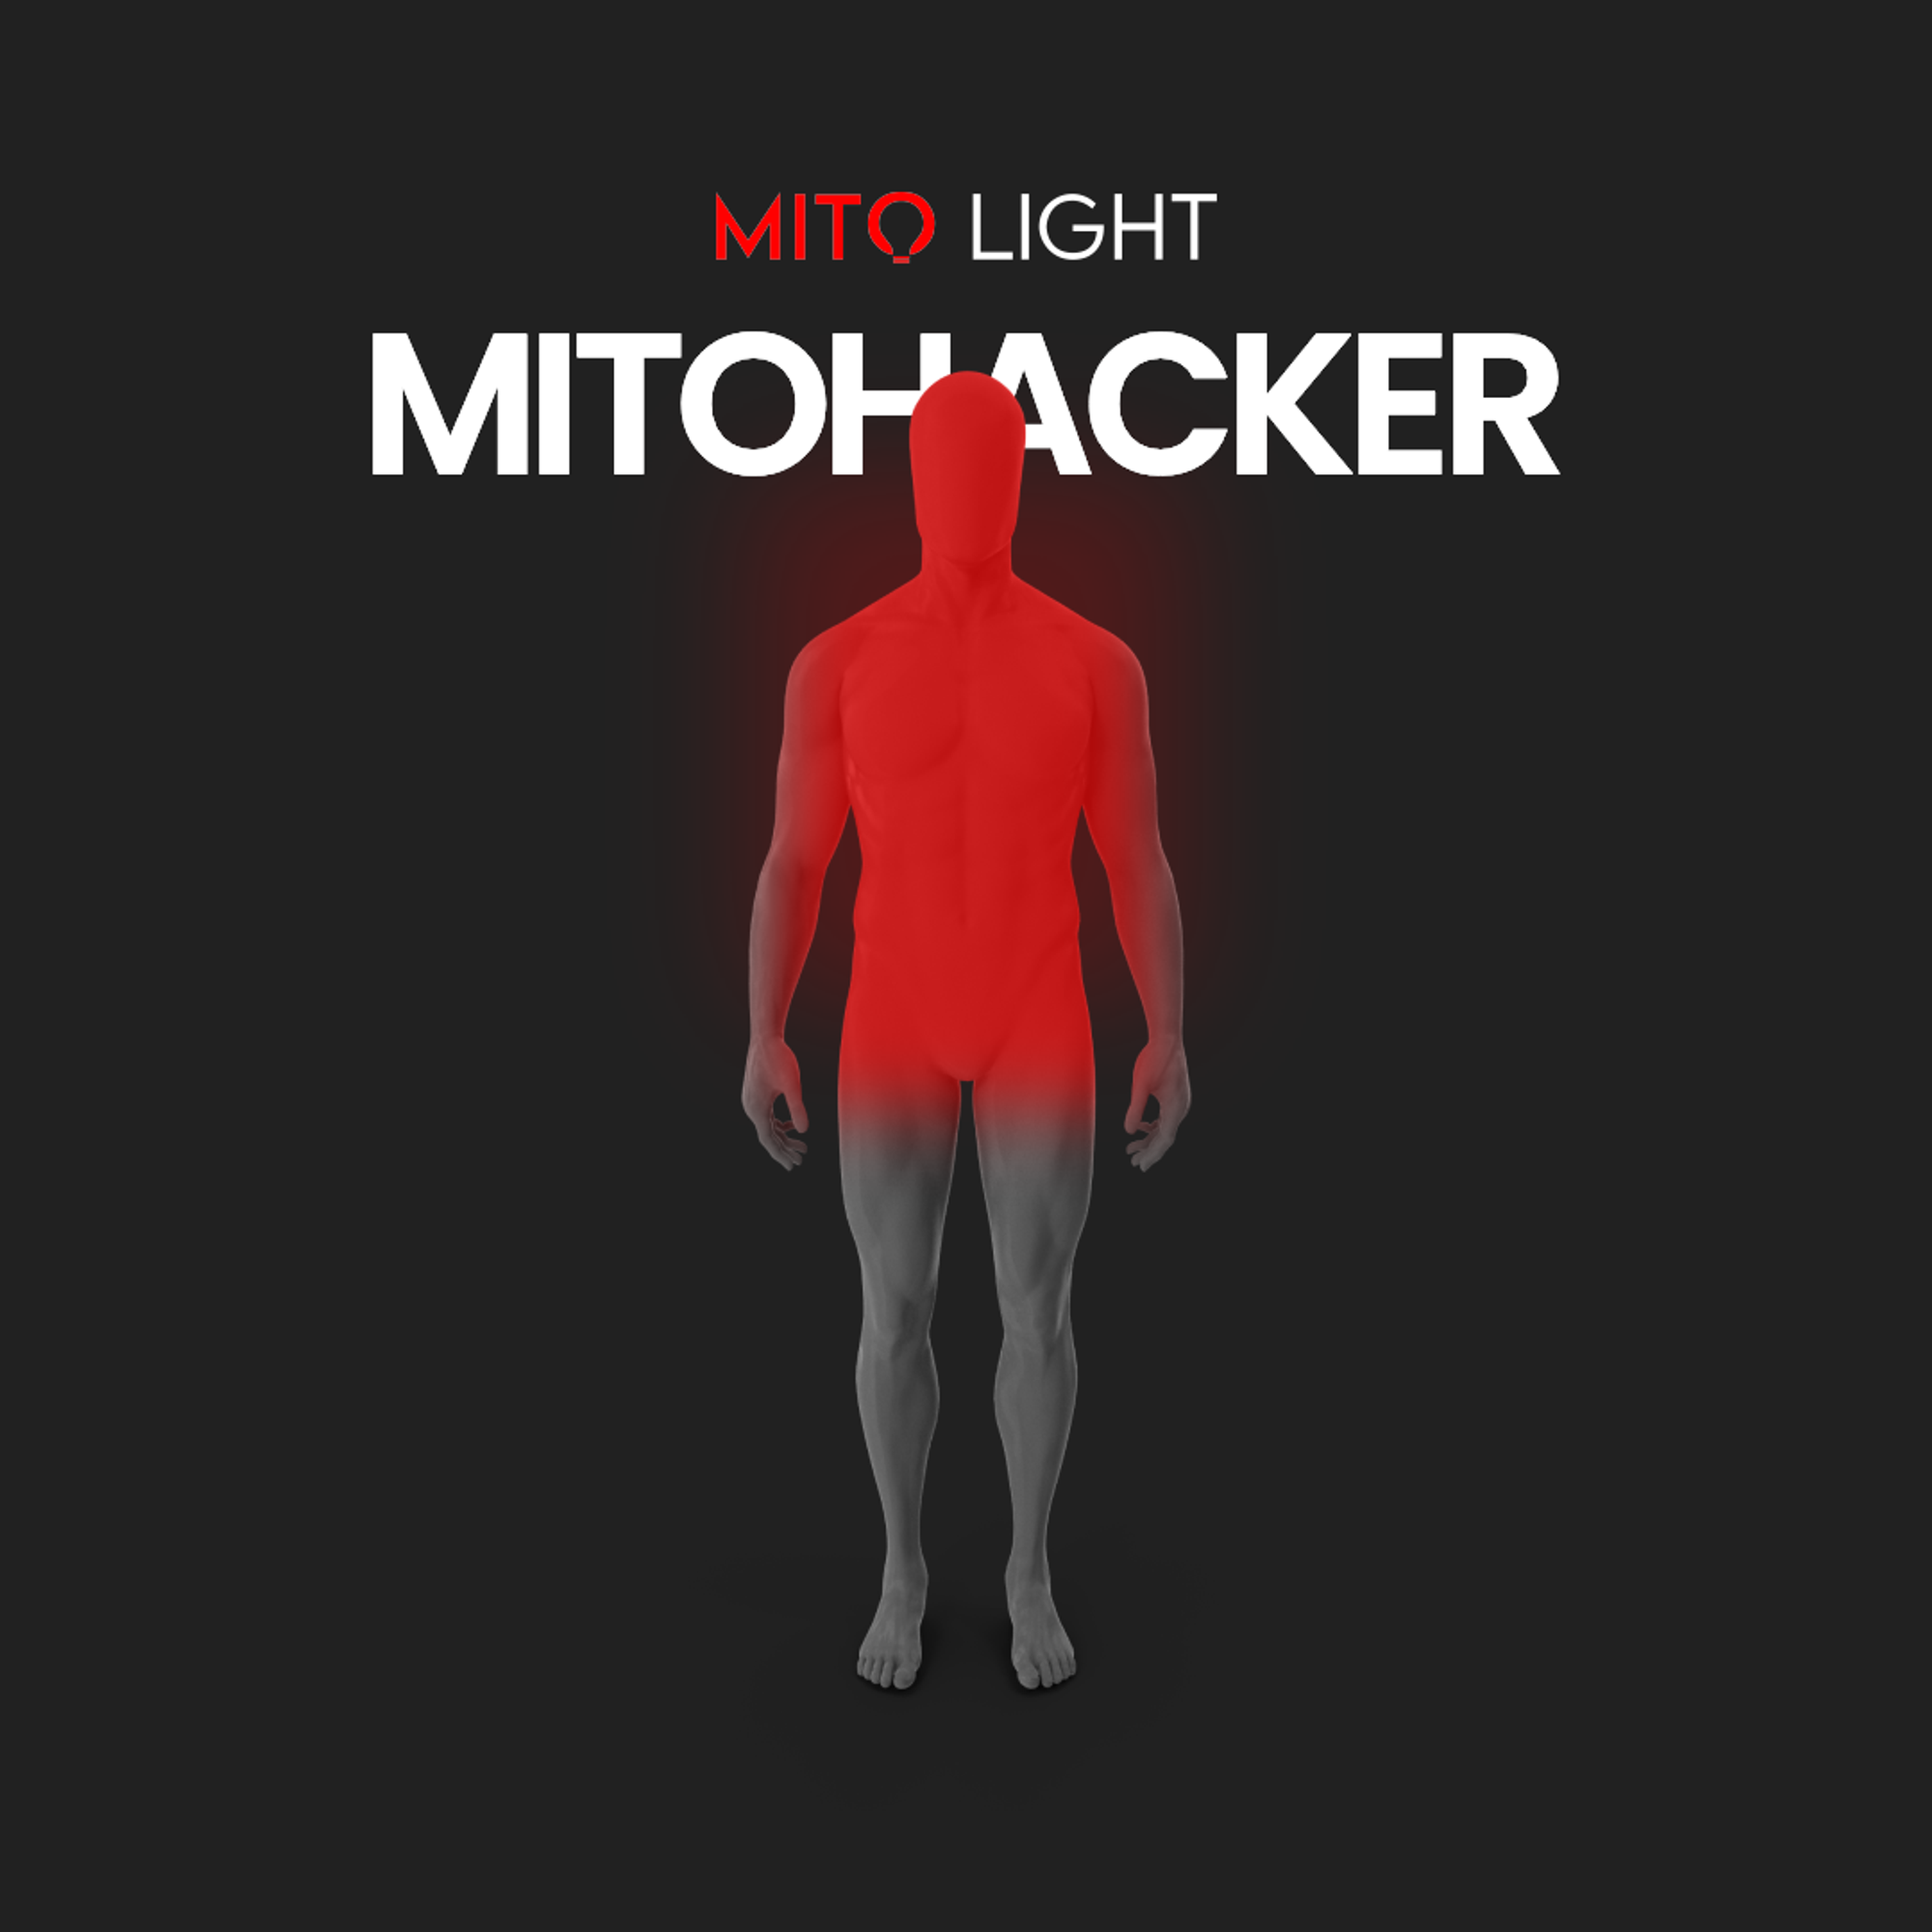 mito-light-mitohacker-3-0-predek-tela